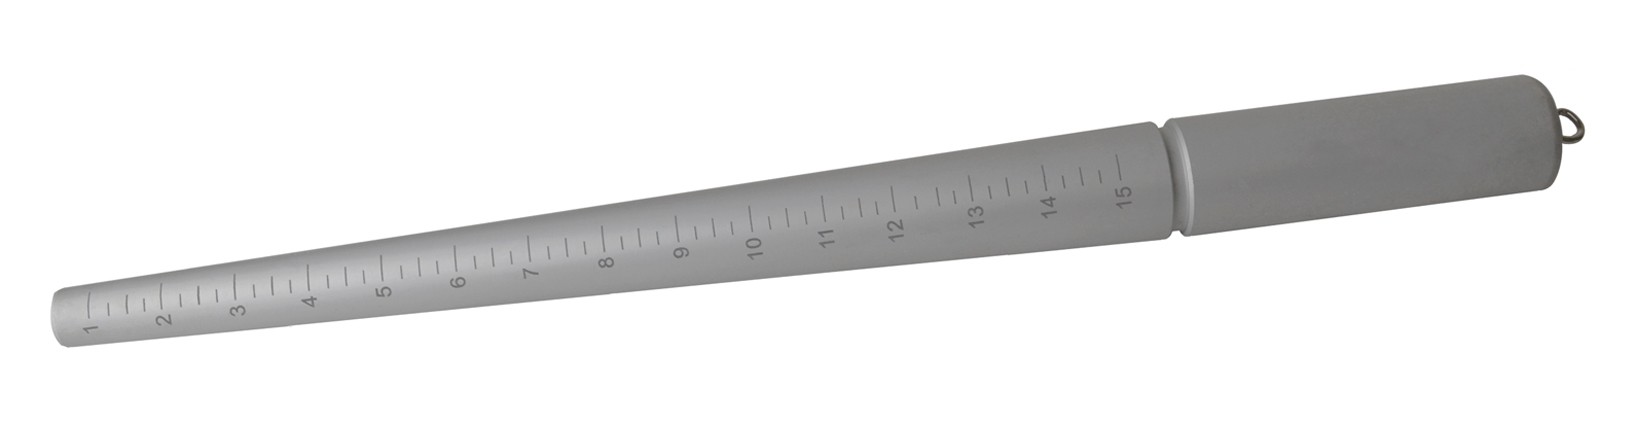 12" Aluminum Ring Stick with U.S. Standard Sizes 1-15